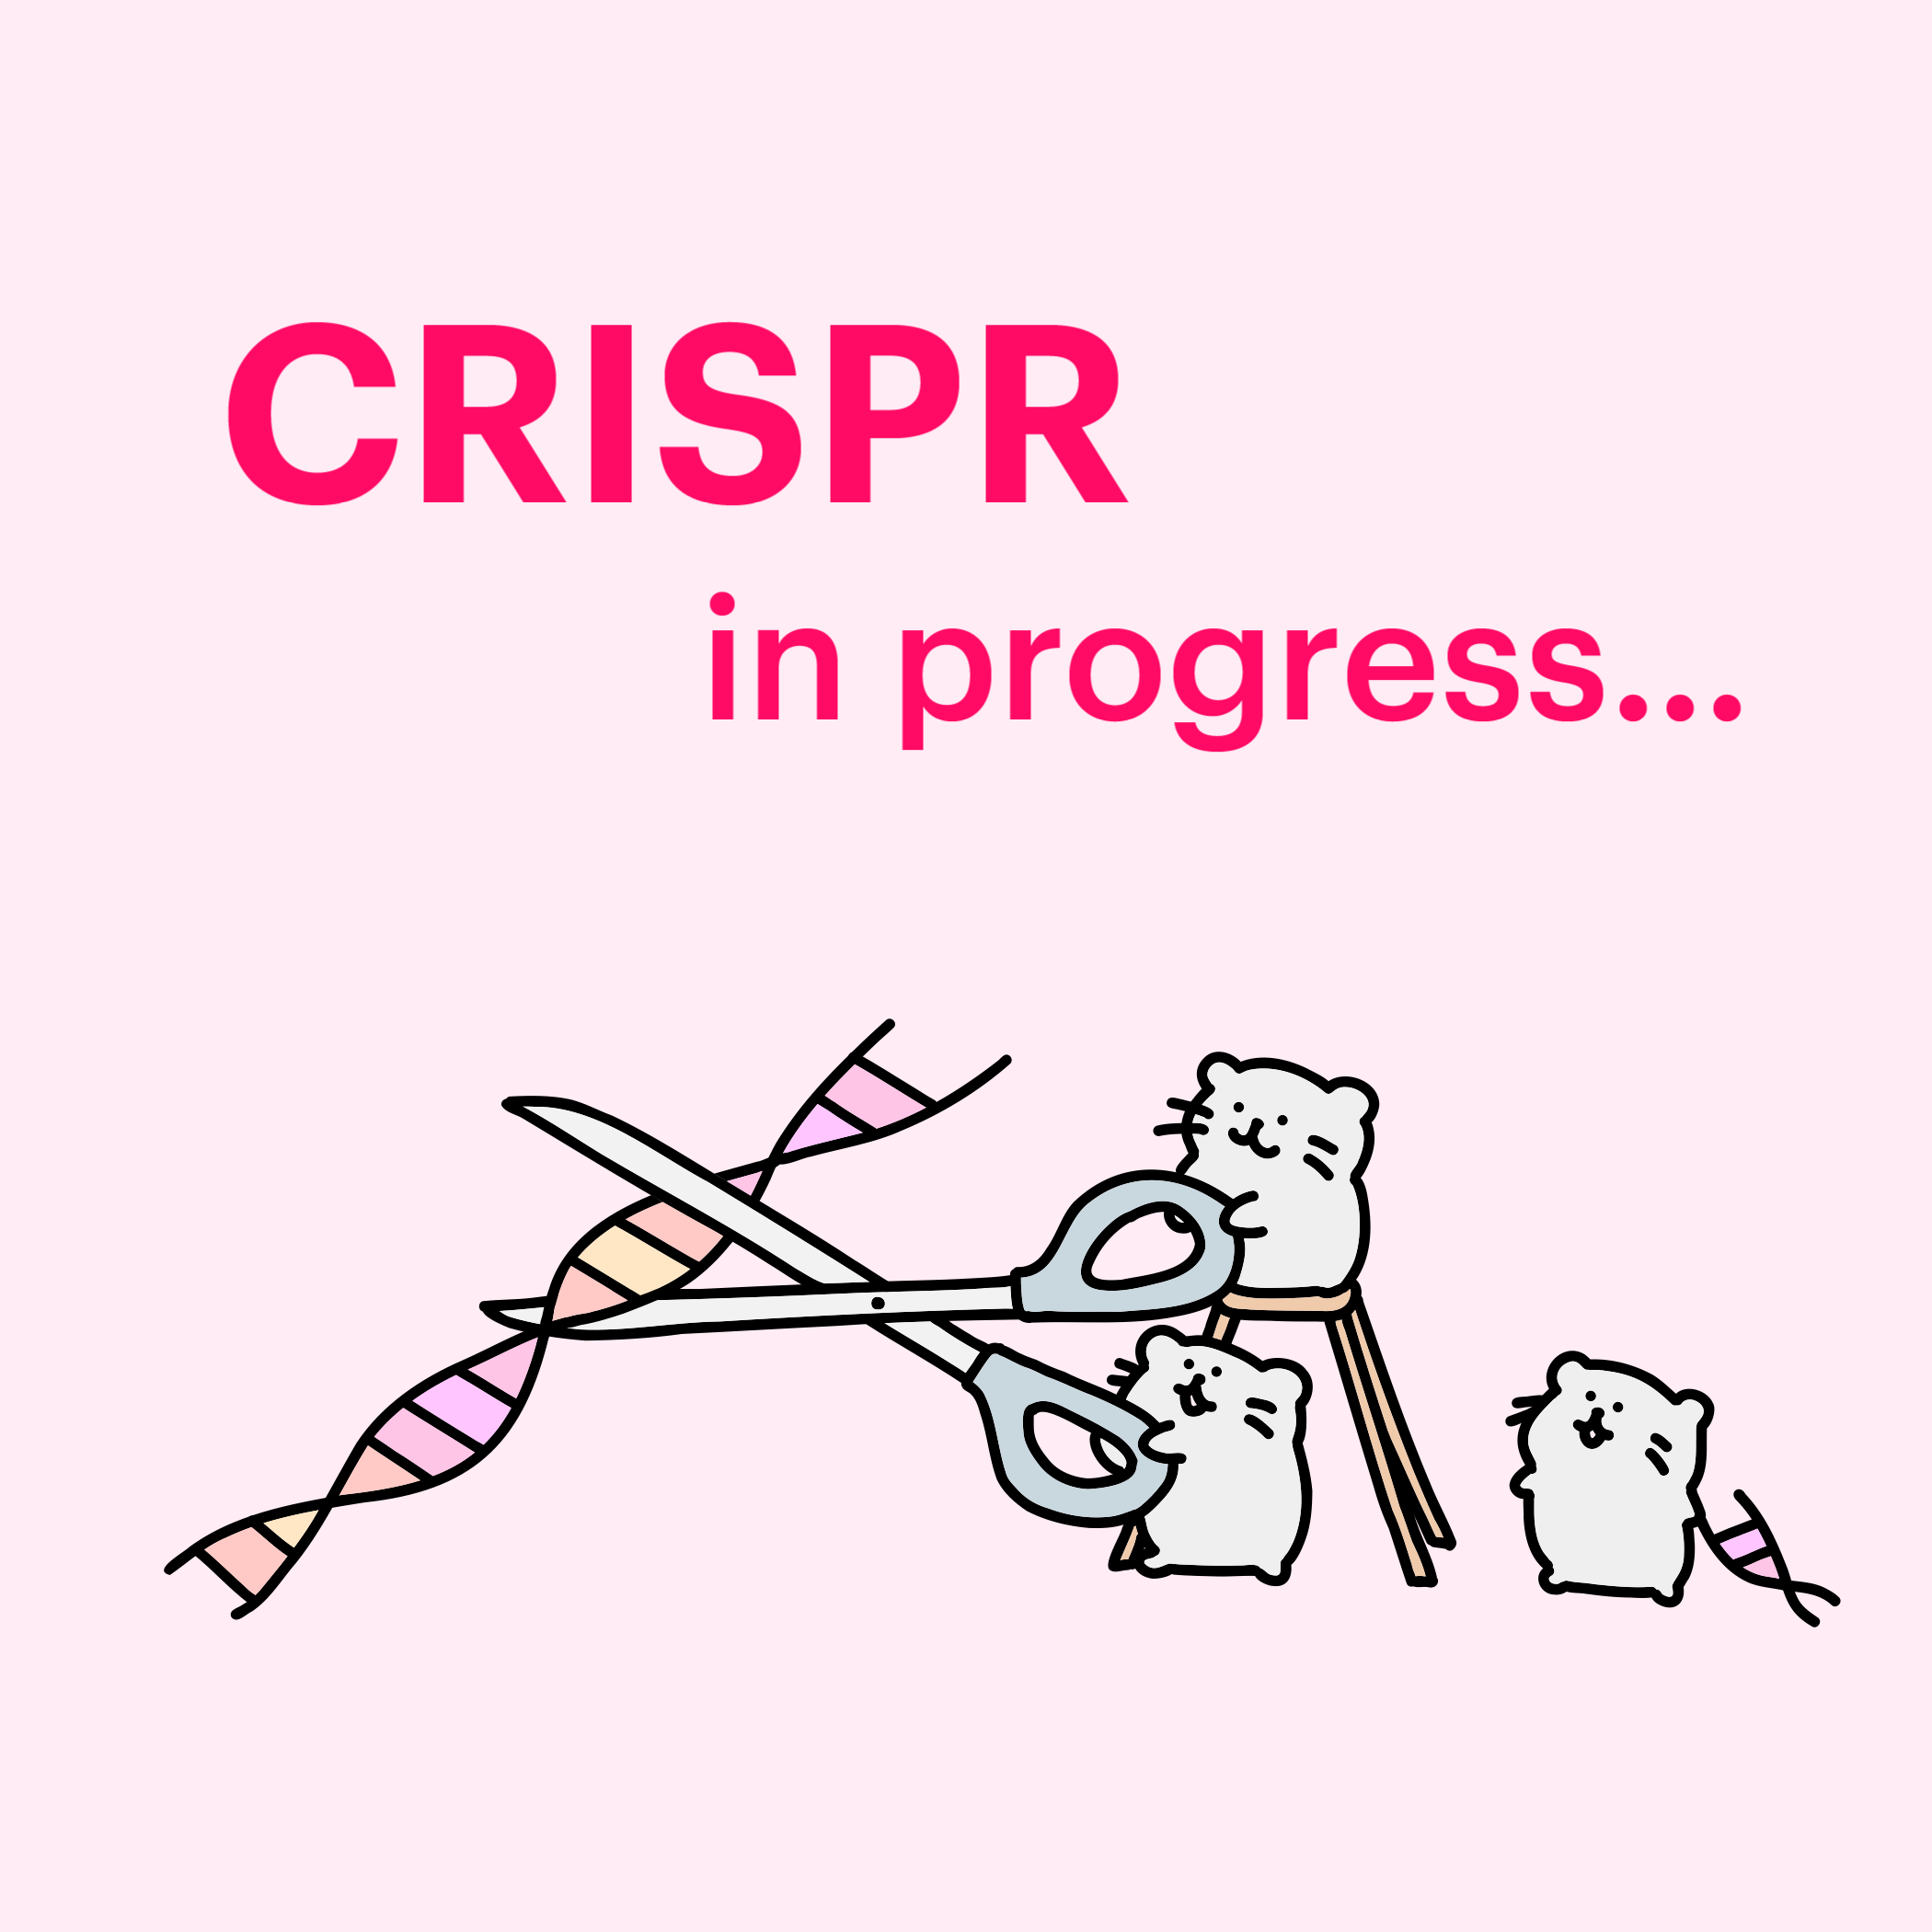 Cartoon mice cut a strand of DNA with scissors under the words "CRISPR in progress"